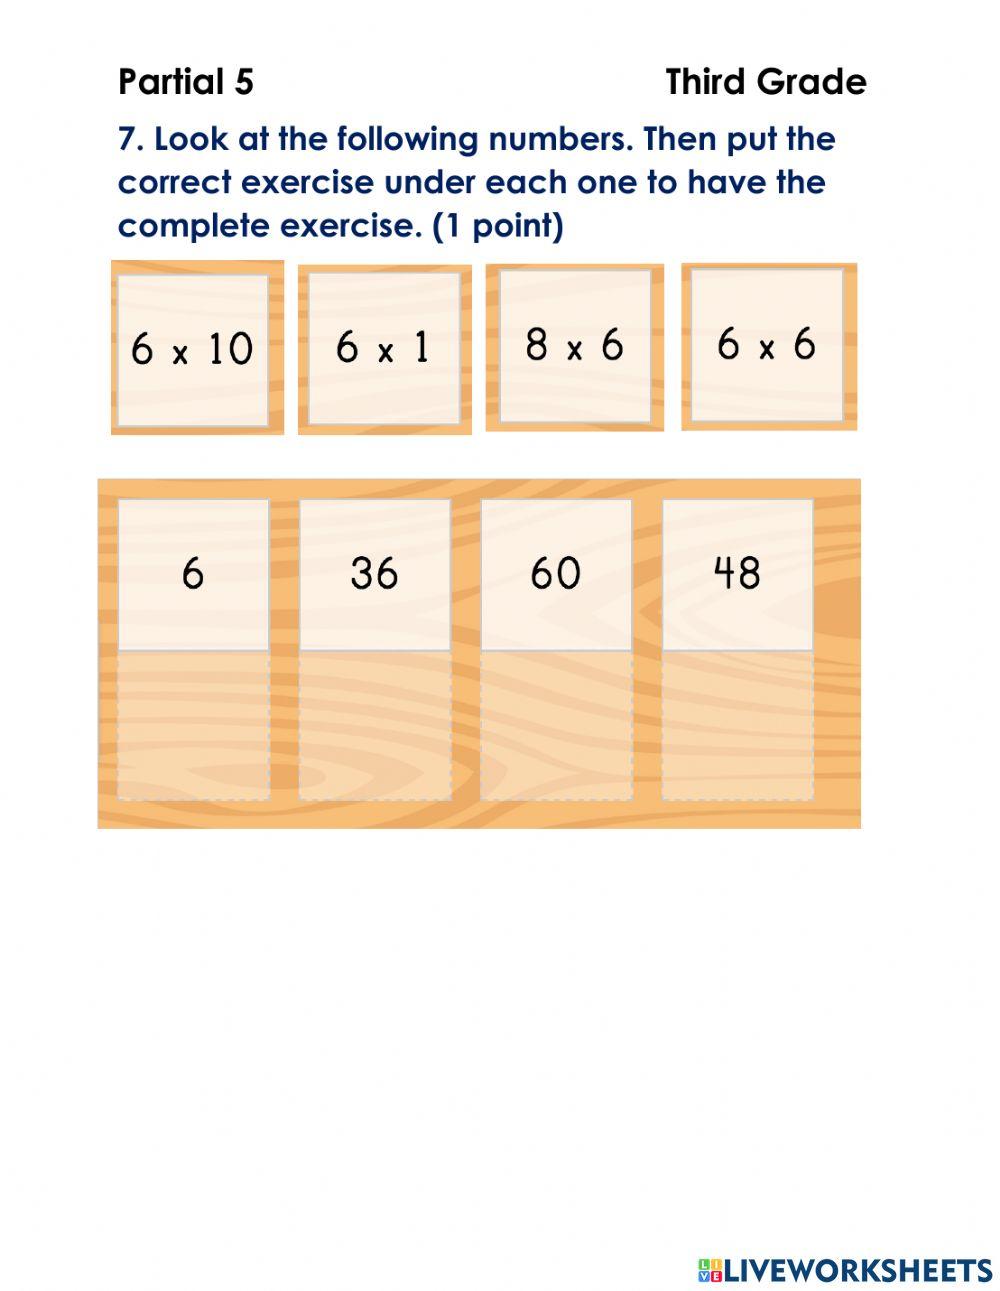 Math quiz partial 5